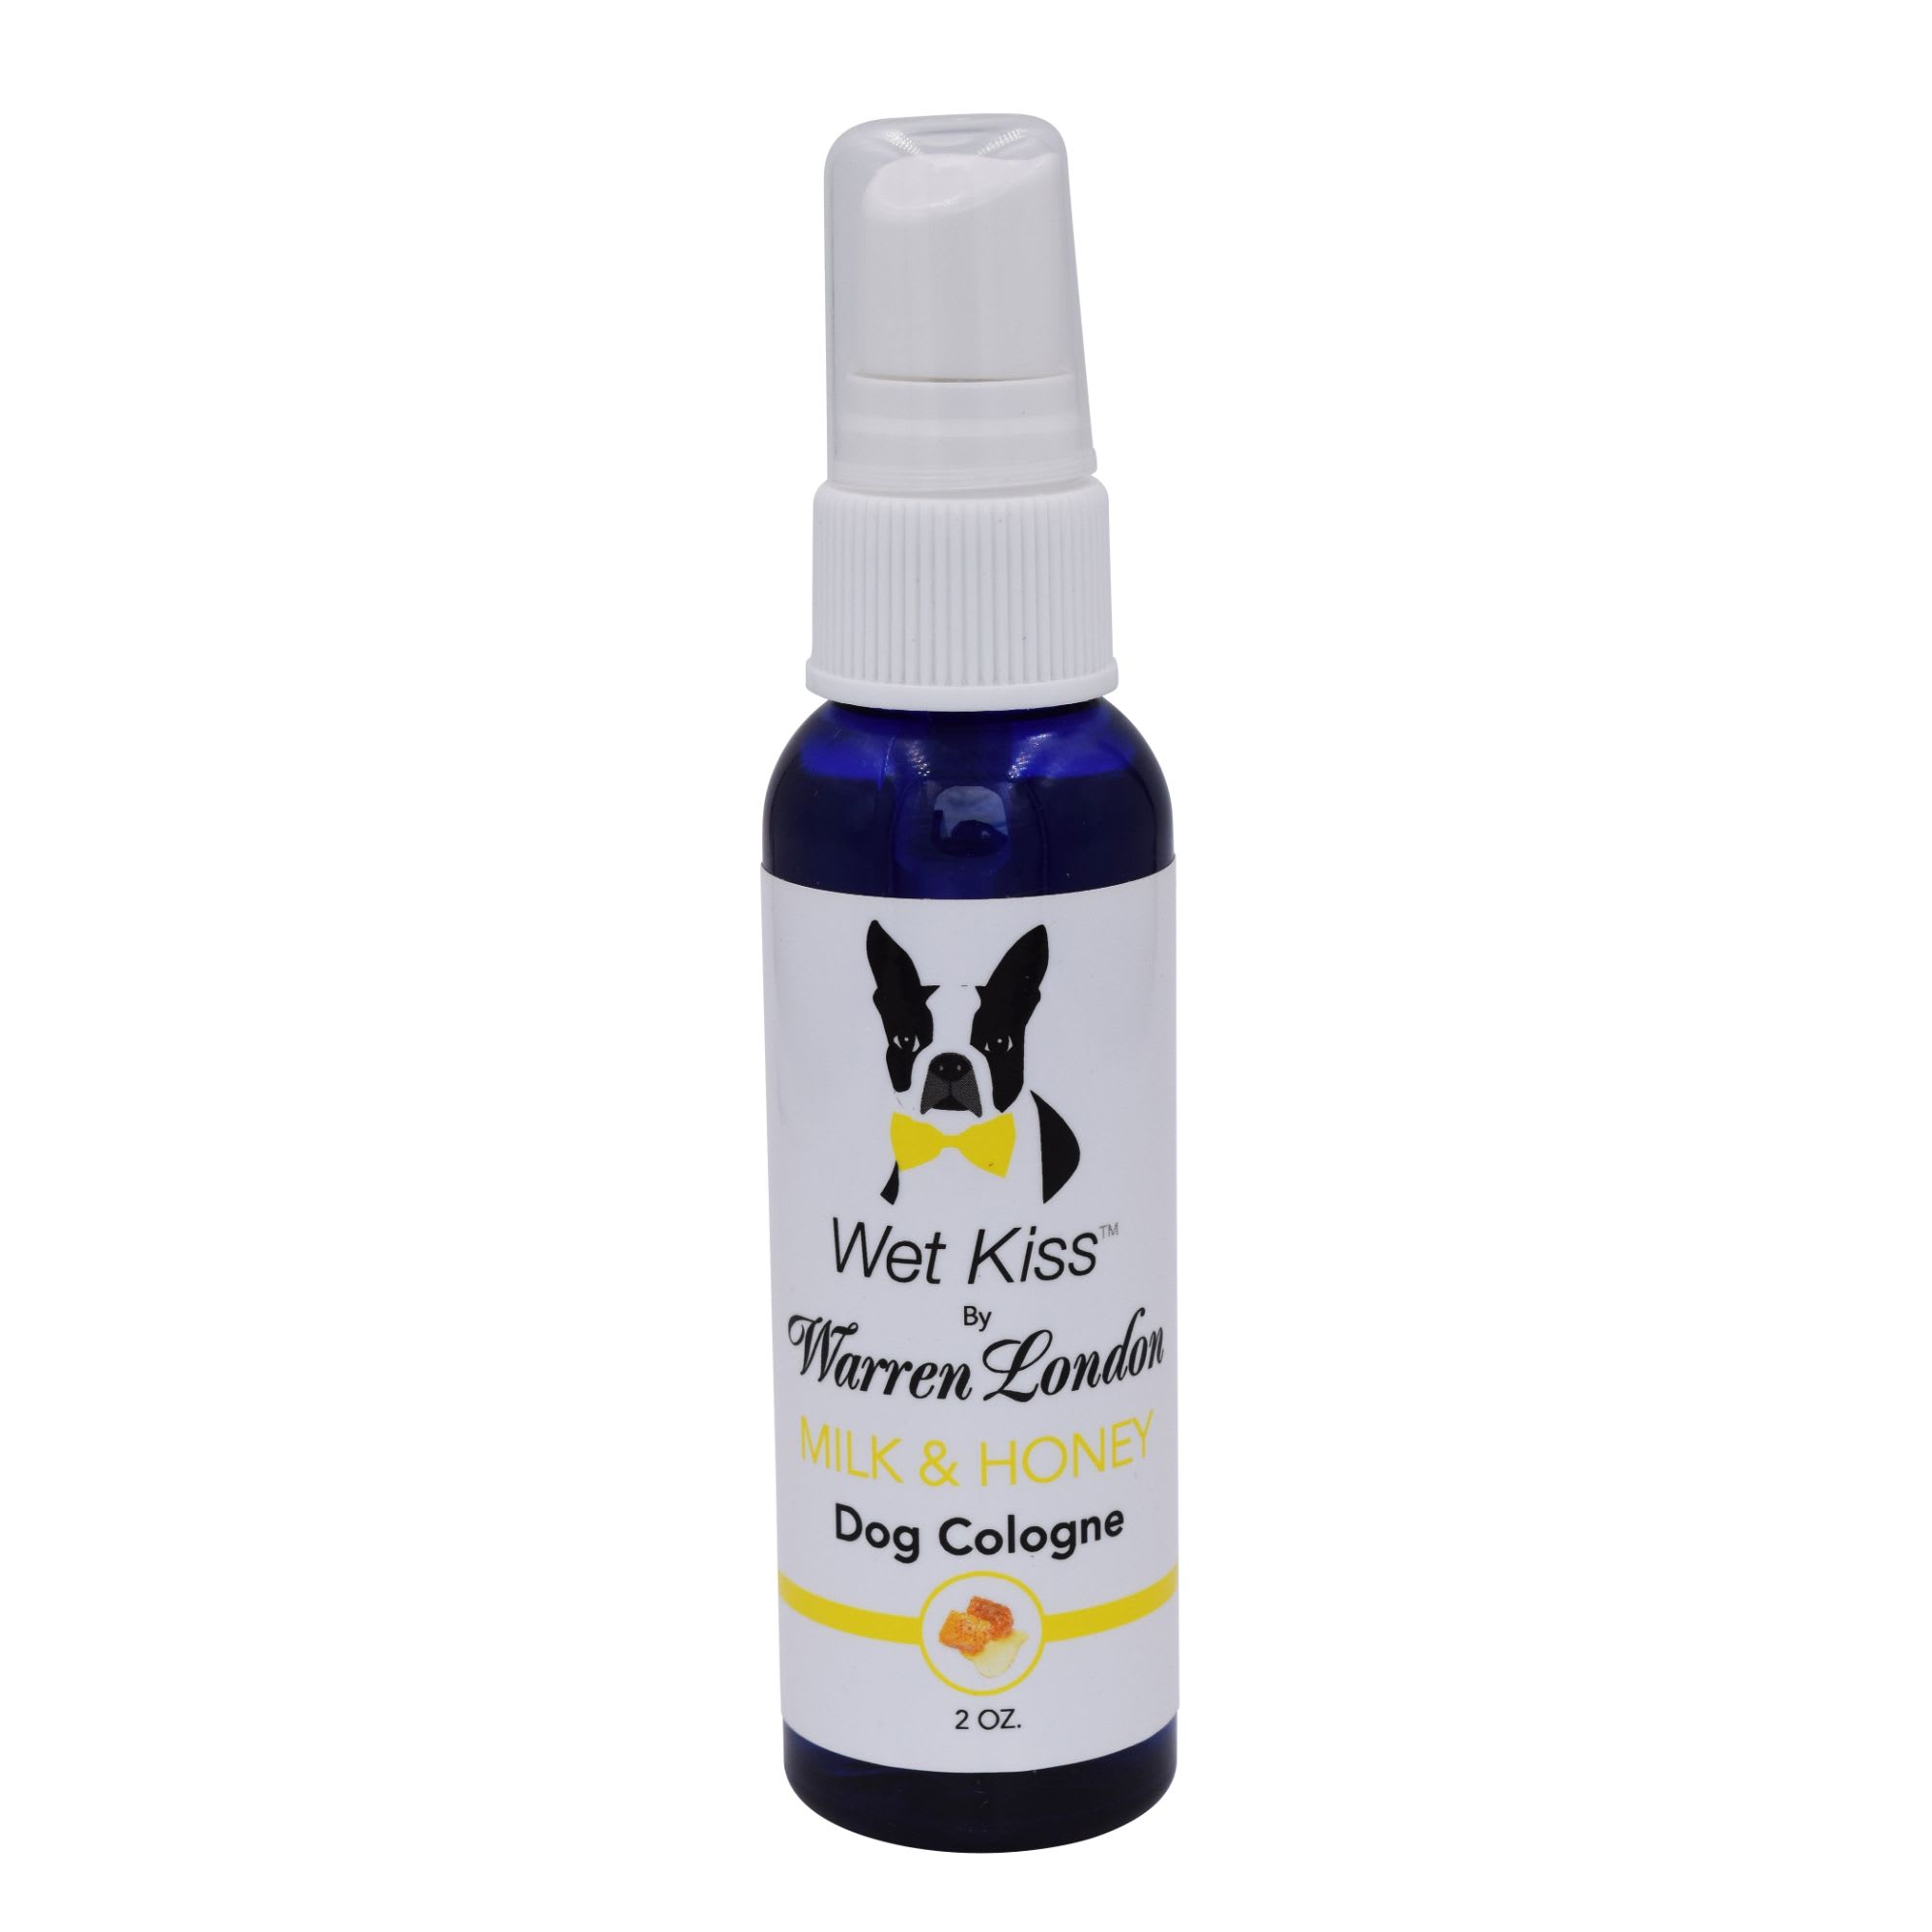 Warren London Milk & Honey Wet Kiss Colonge Spray for Dogs, 2 fl. oz. | Petco